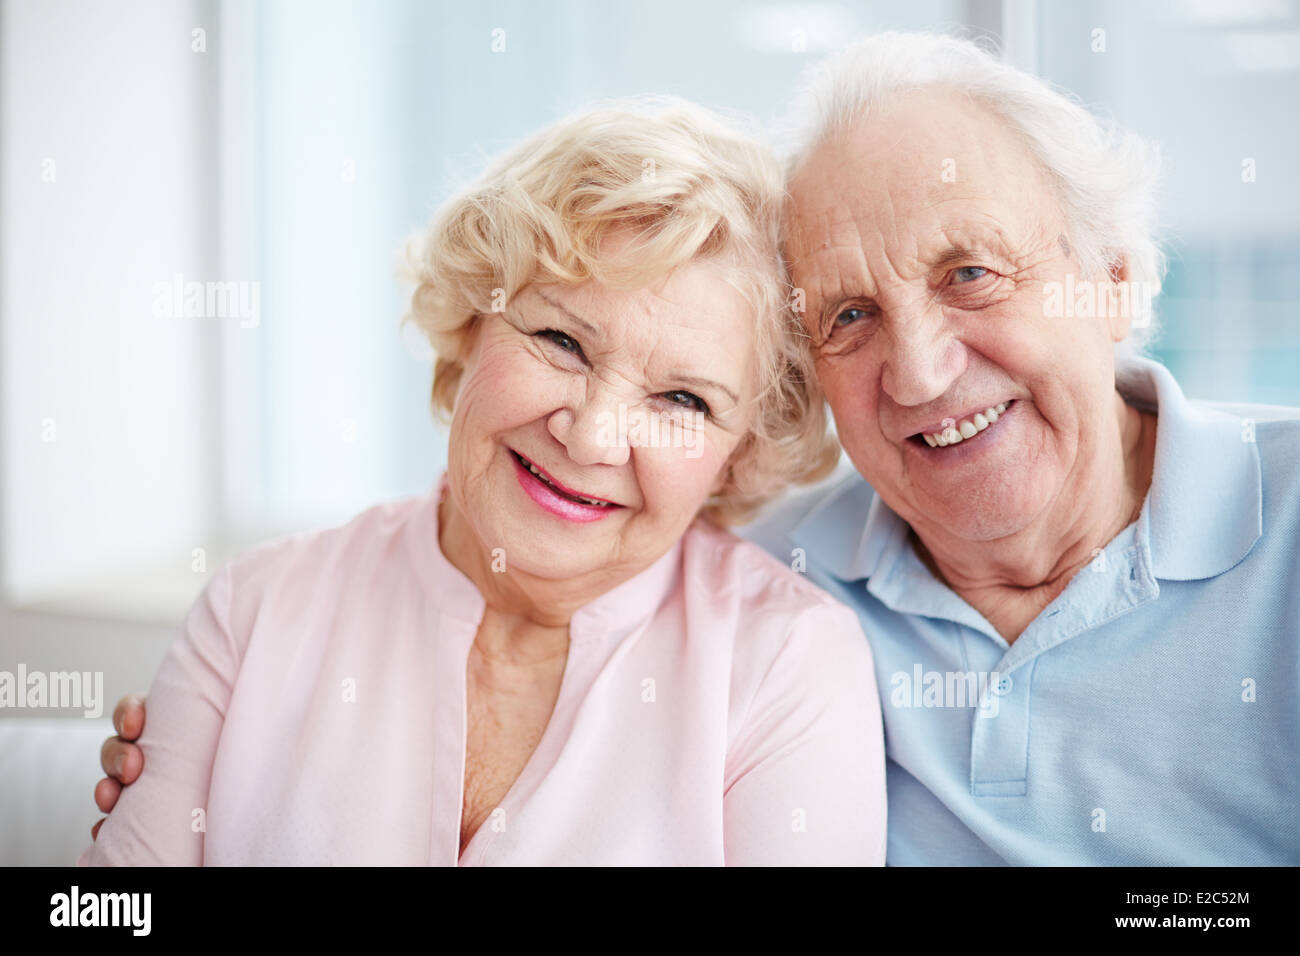 Portrait of charming seniors enjoying spending time together Stock Photo